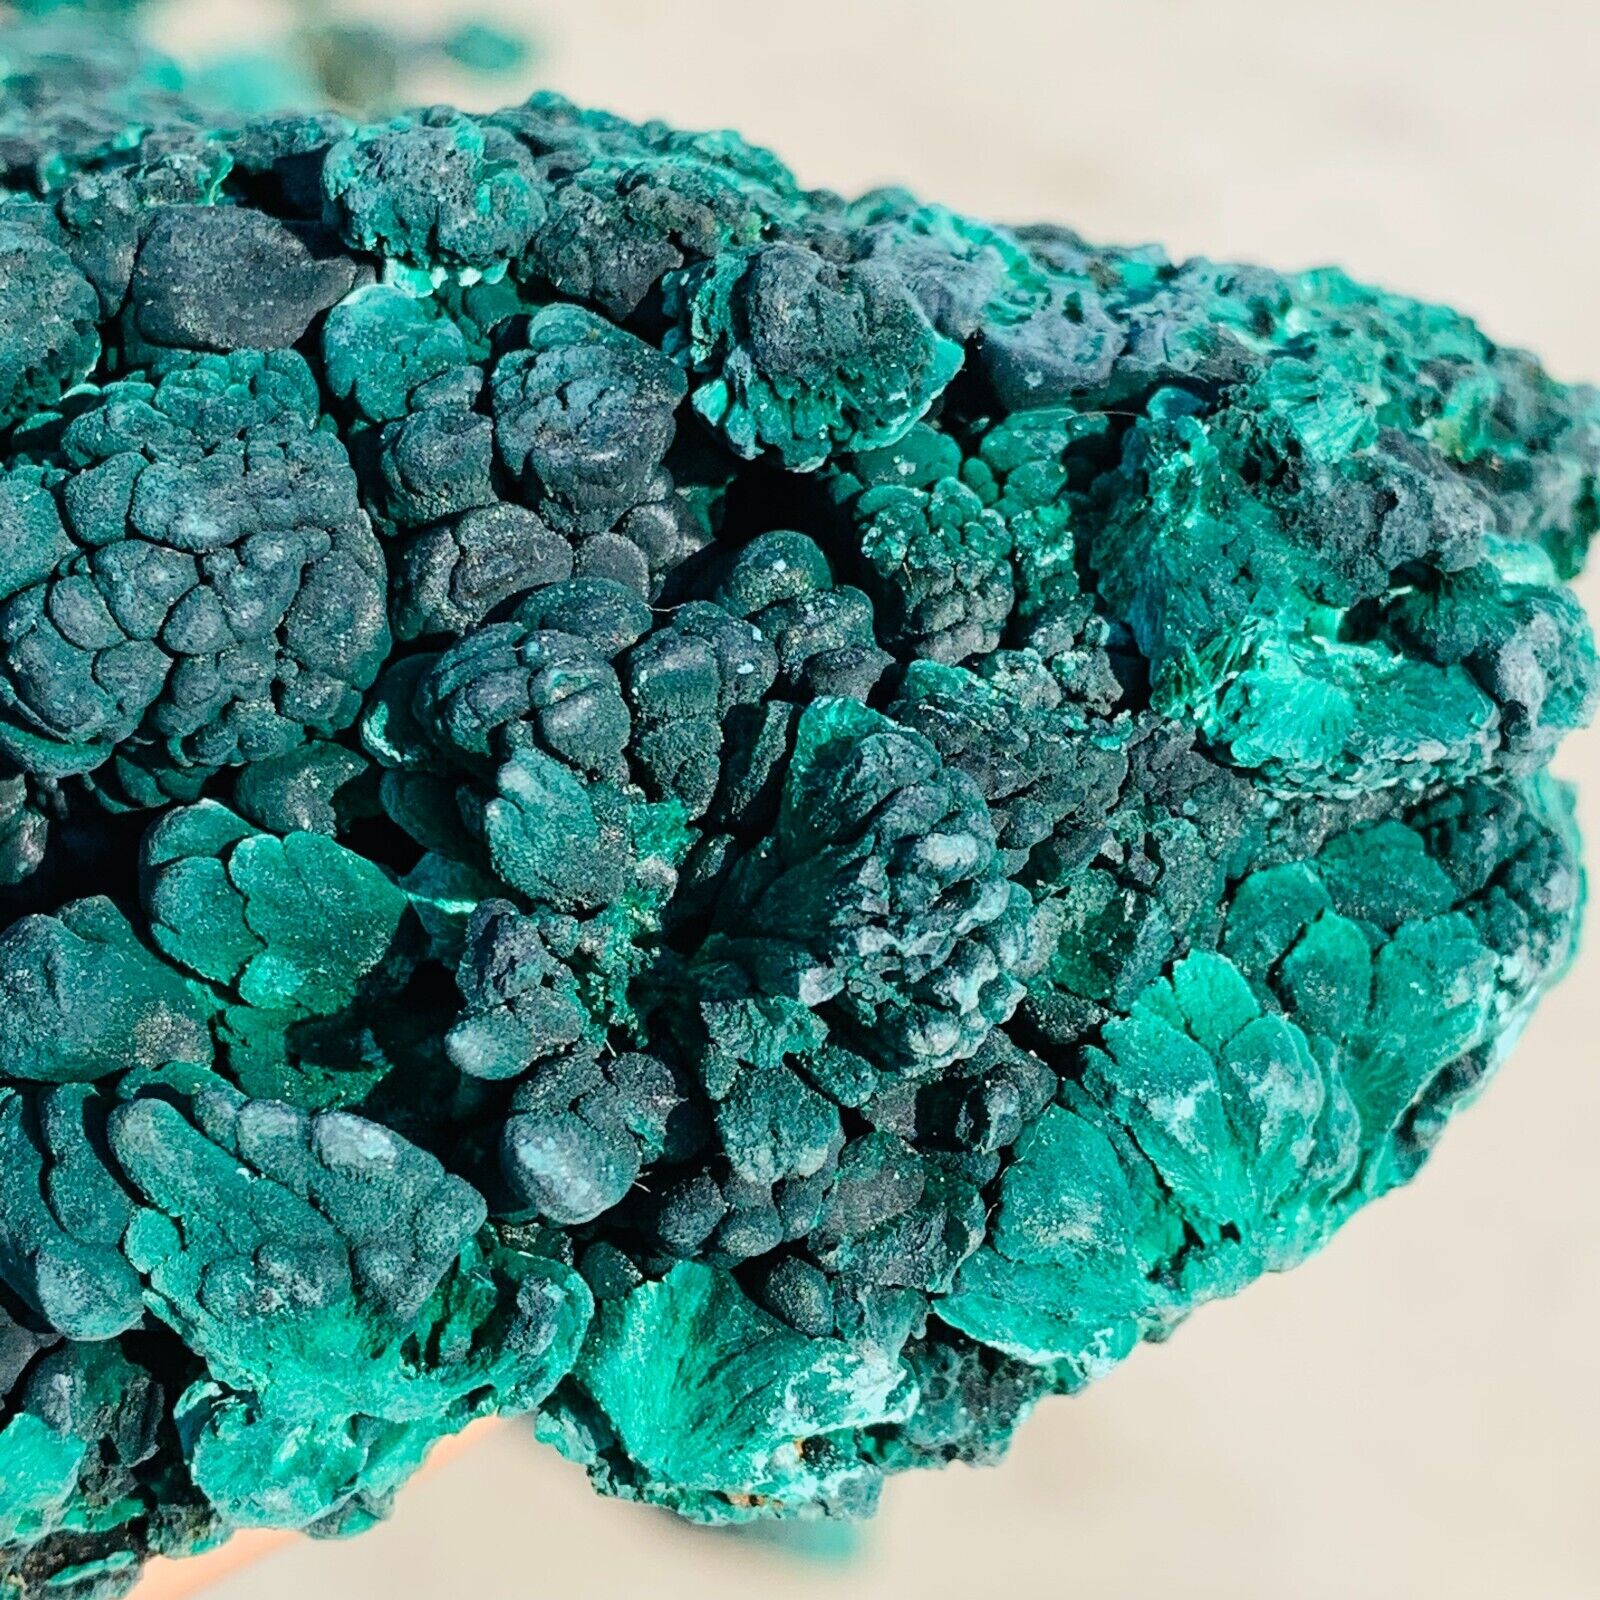 1636g Amazing Natural Green Malachite Crystal Gemstone Rough Mineral Specimen